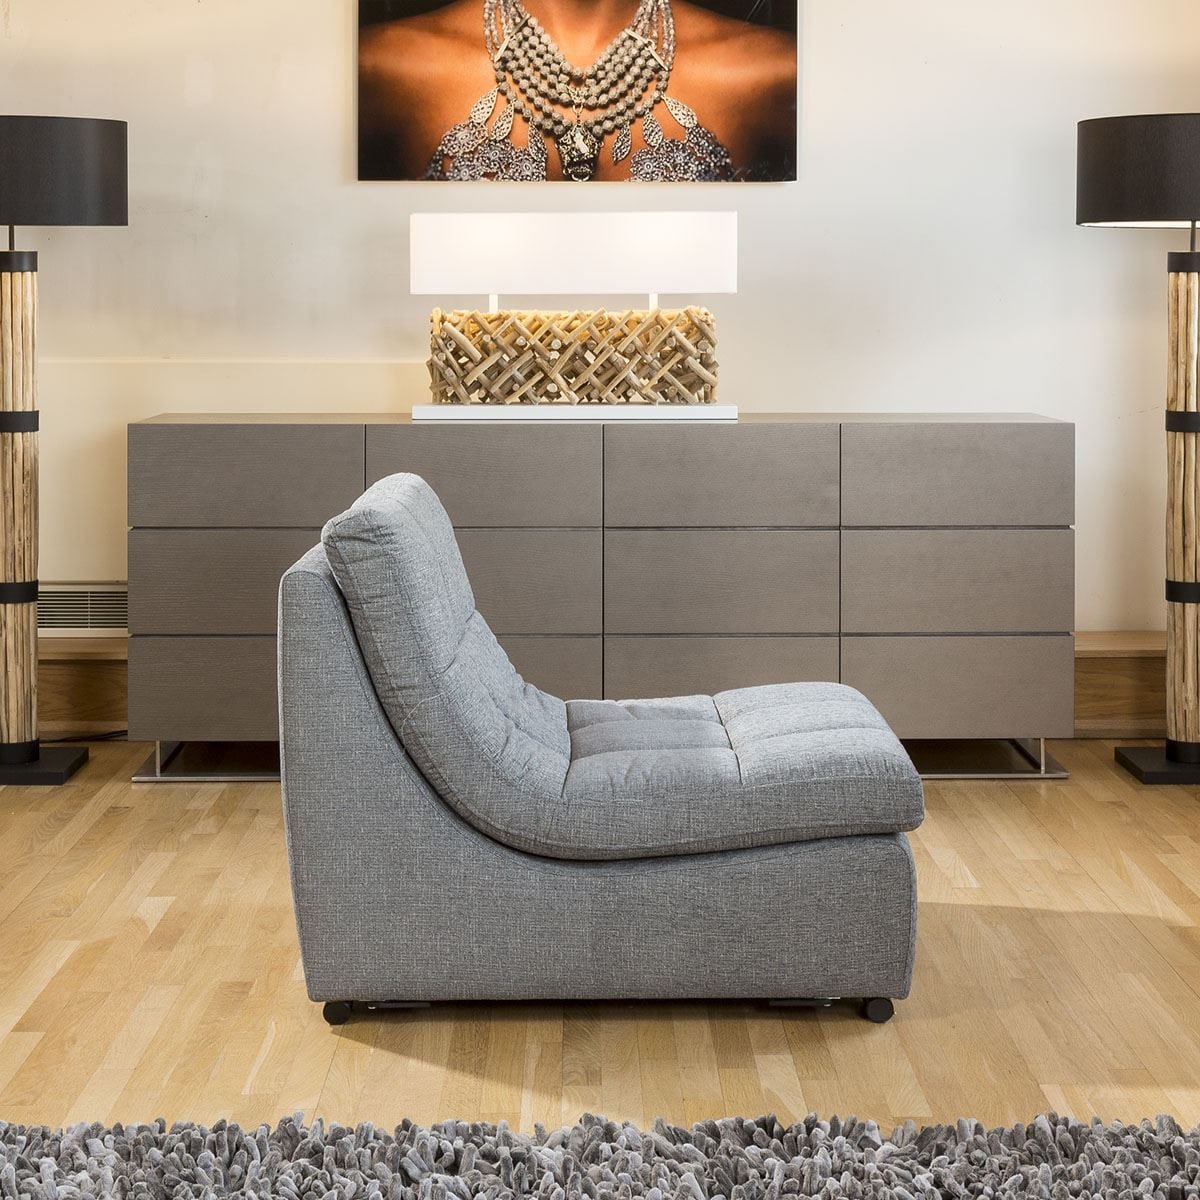 Quatropi Relax Premium Desginer Sofa Middle Piece Single Chair 80cm Wide